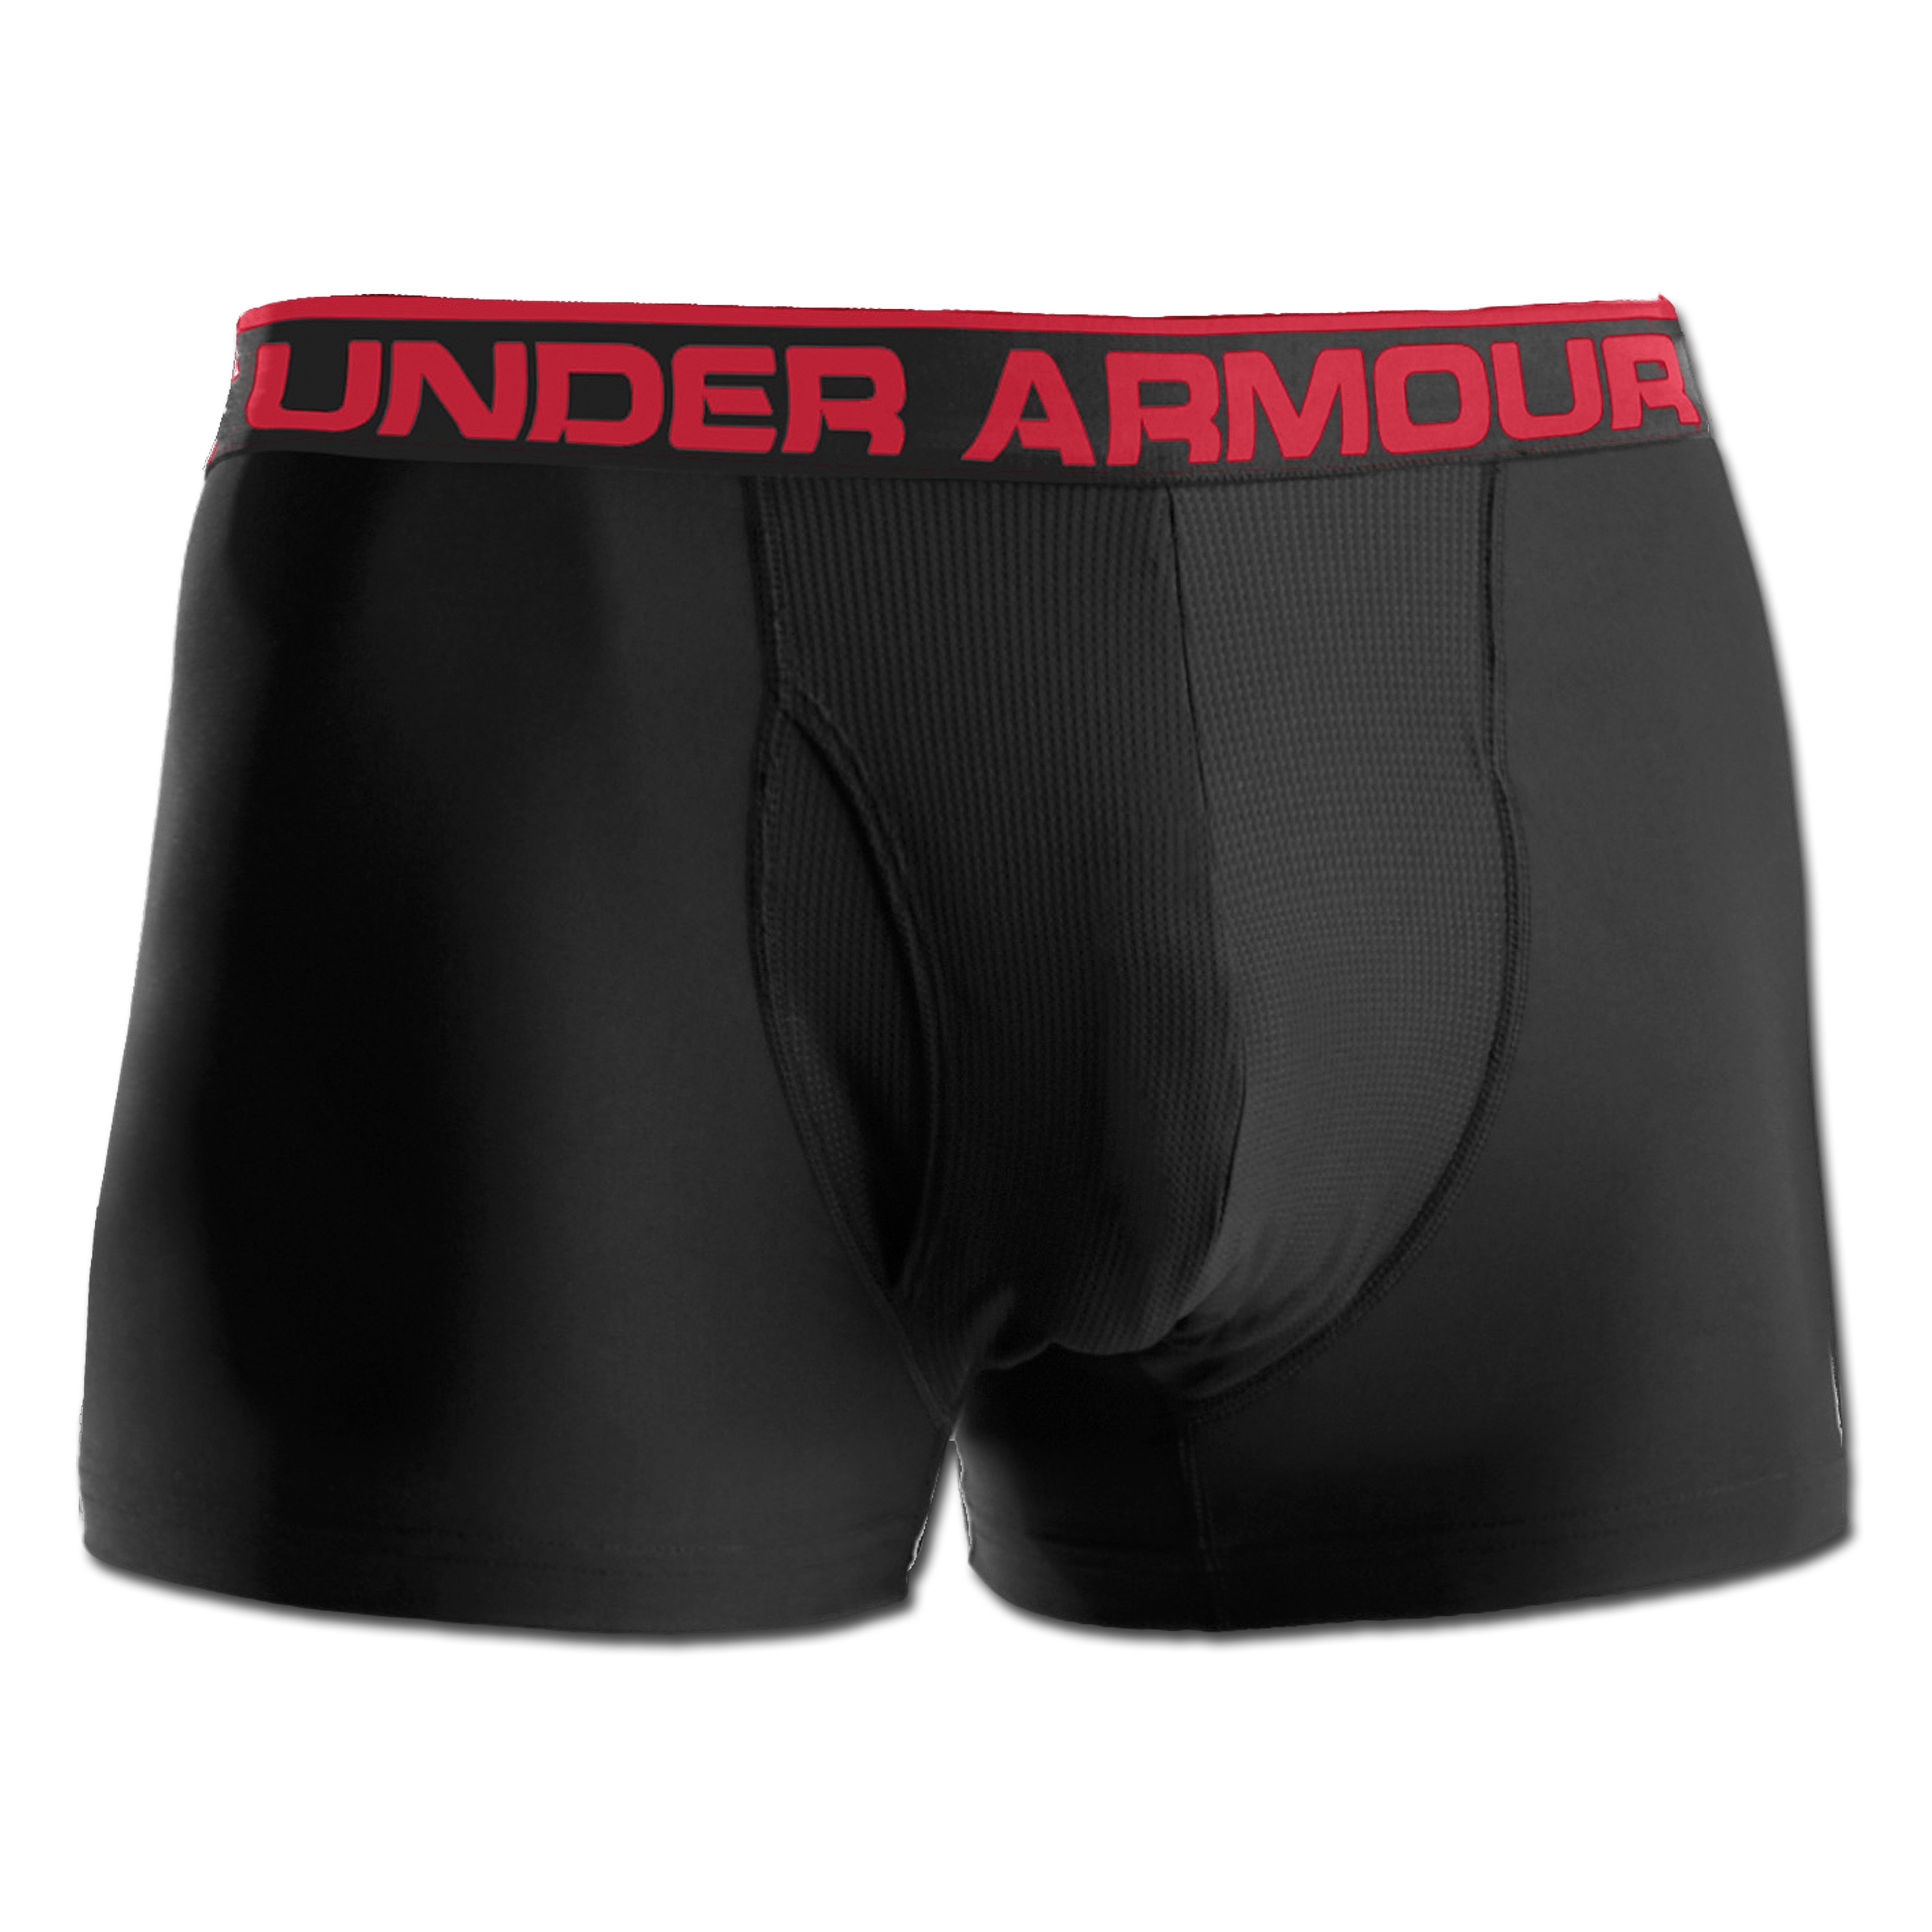 Under Armour Boxer Jock Short black | Under Armour Boxer Jock Short ...